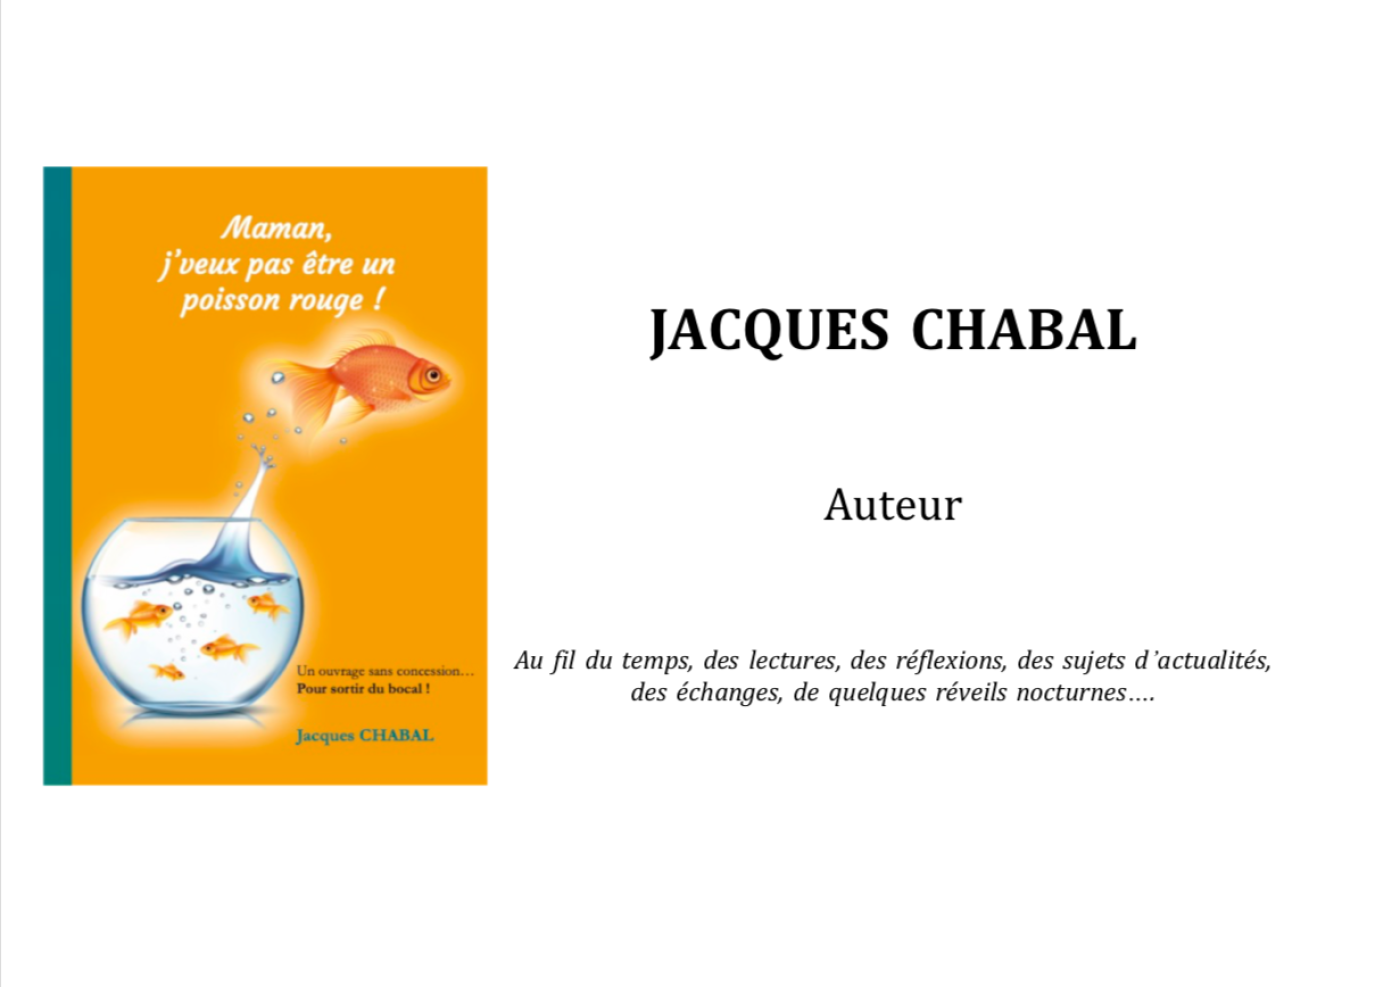 Jacques chabal